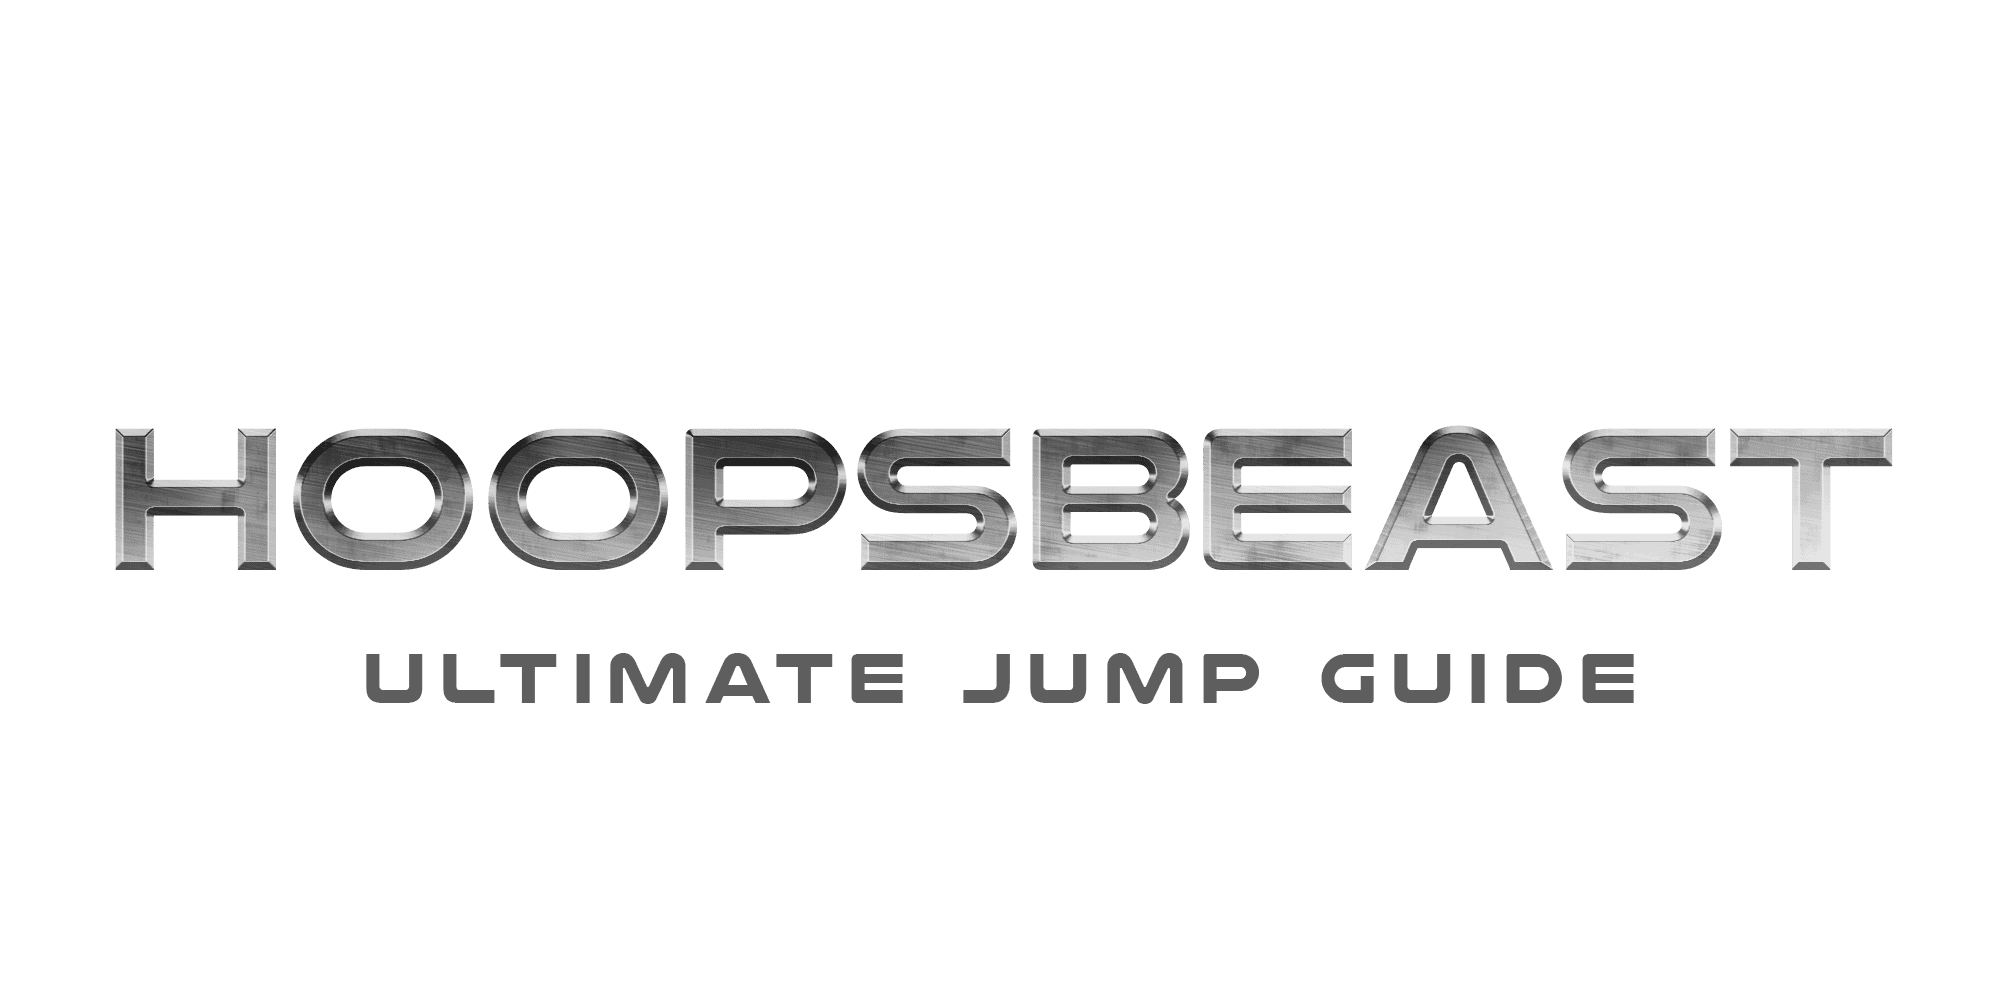 HOOPSBEAST Presents: The Ultimate Jump Guide